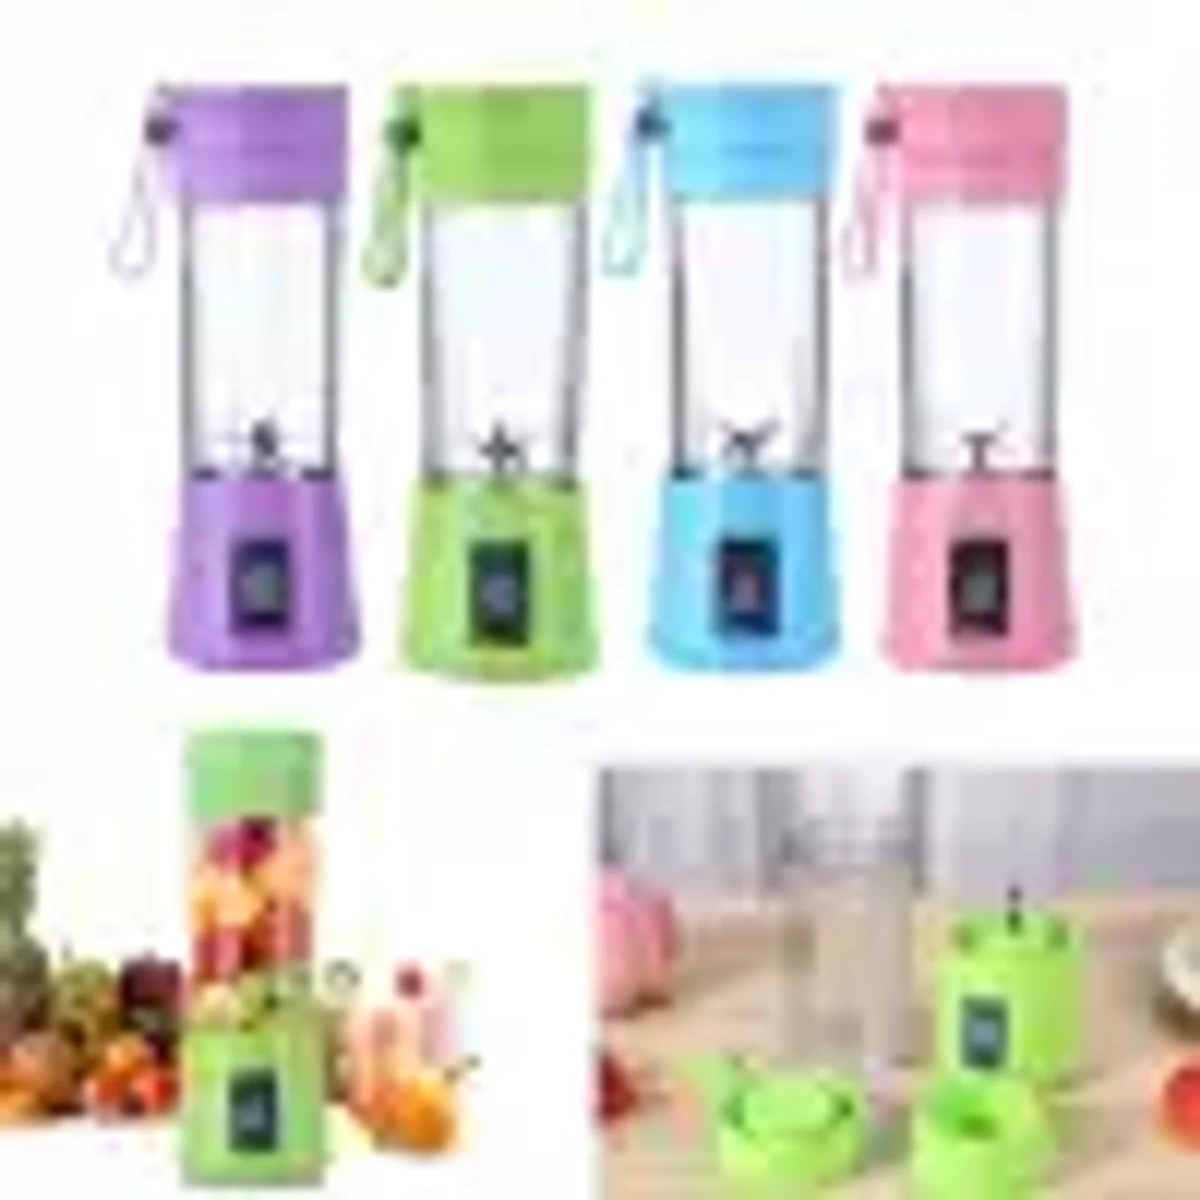 Portable Electric Blender 380ML Smart Home Fruit Juicer Machine Vegetable Juice Mixer USB Rechargeable Food Processor Cup